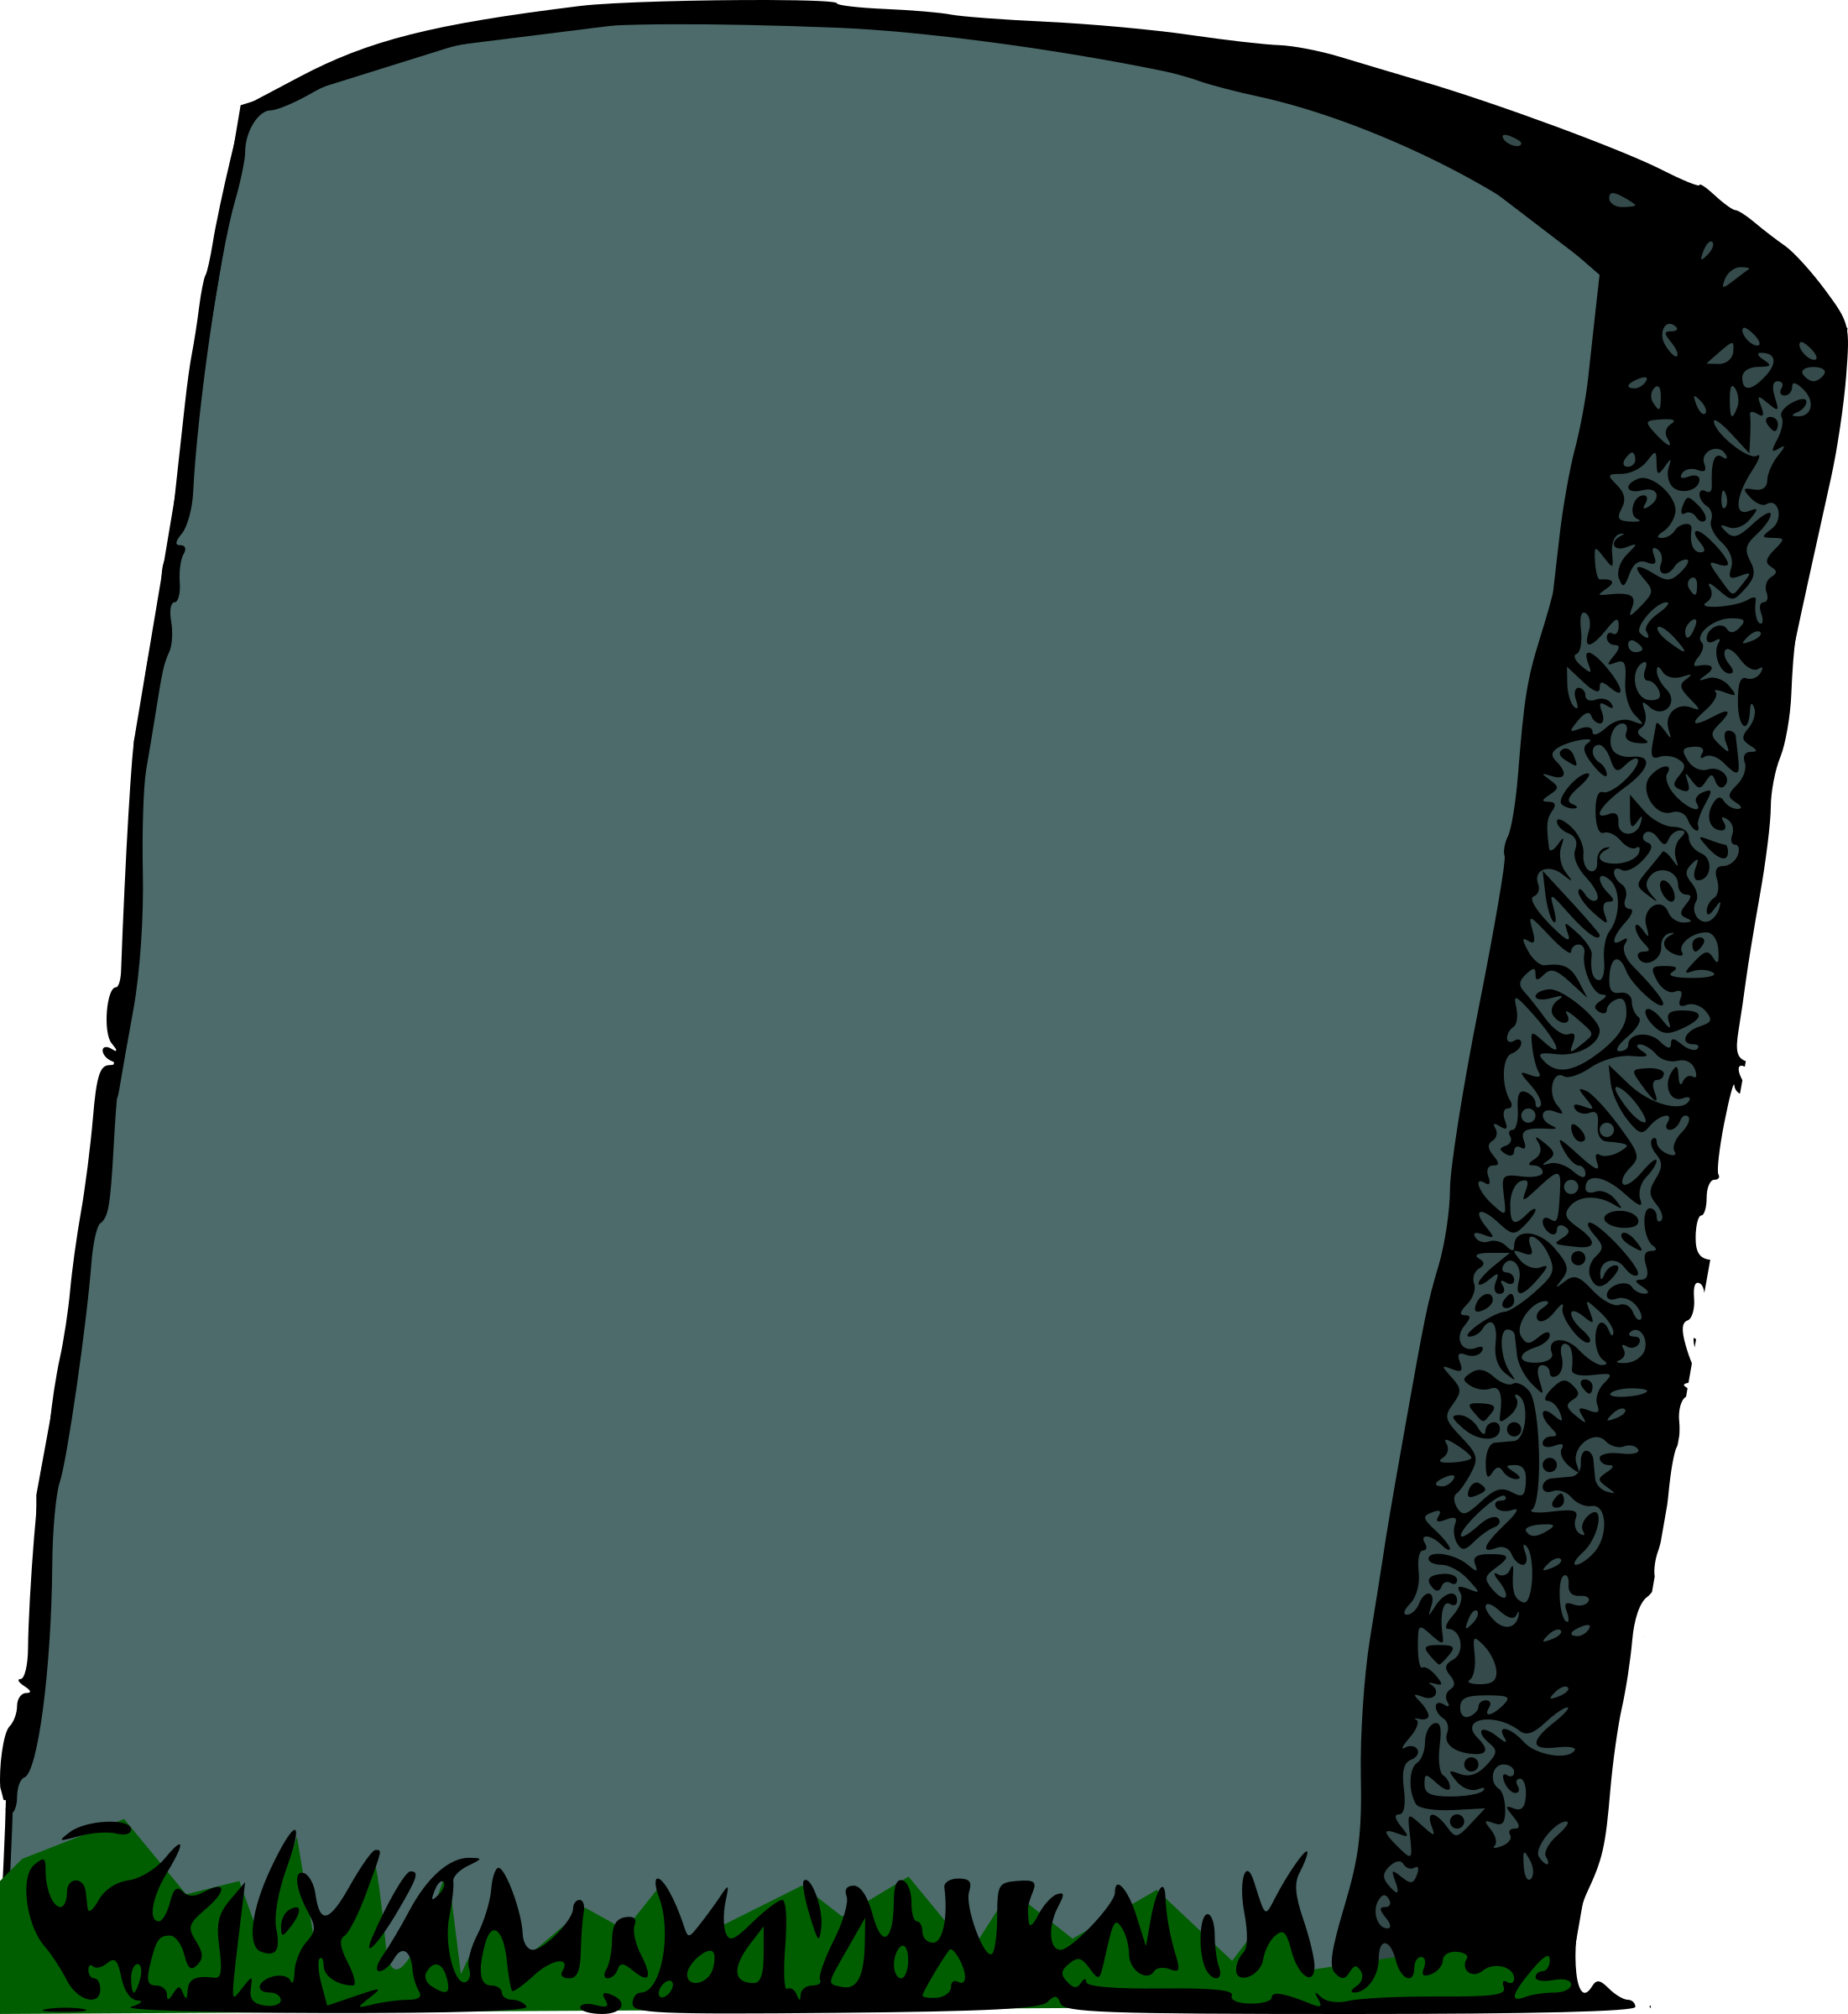 Gravestone - Grave Stone (2202x2400)